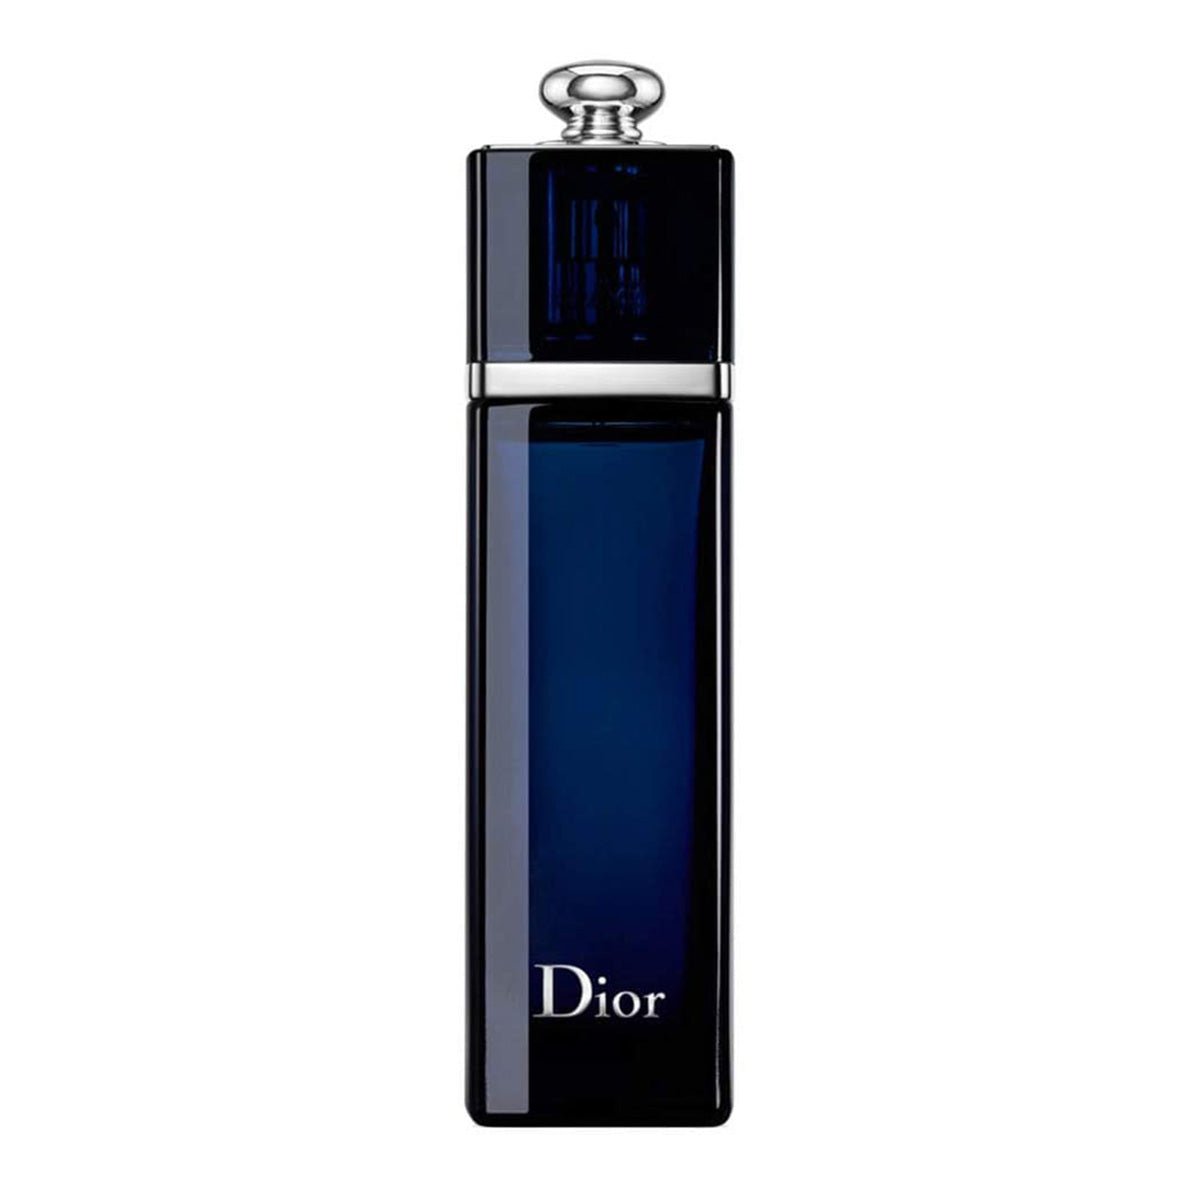 Christian Dior Addict Perfume Edp For Women 100ml-Perfume - AllurebeautypkChristian Dior Addict Perfume Edp For Women 100ml-Perfume